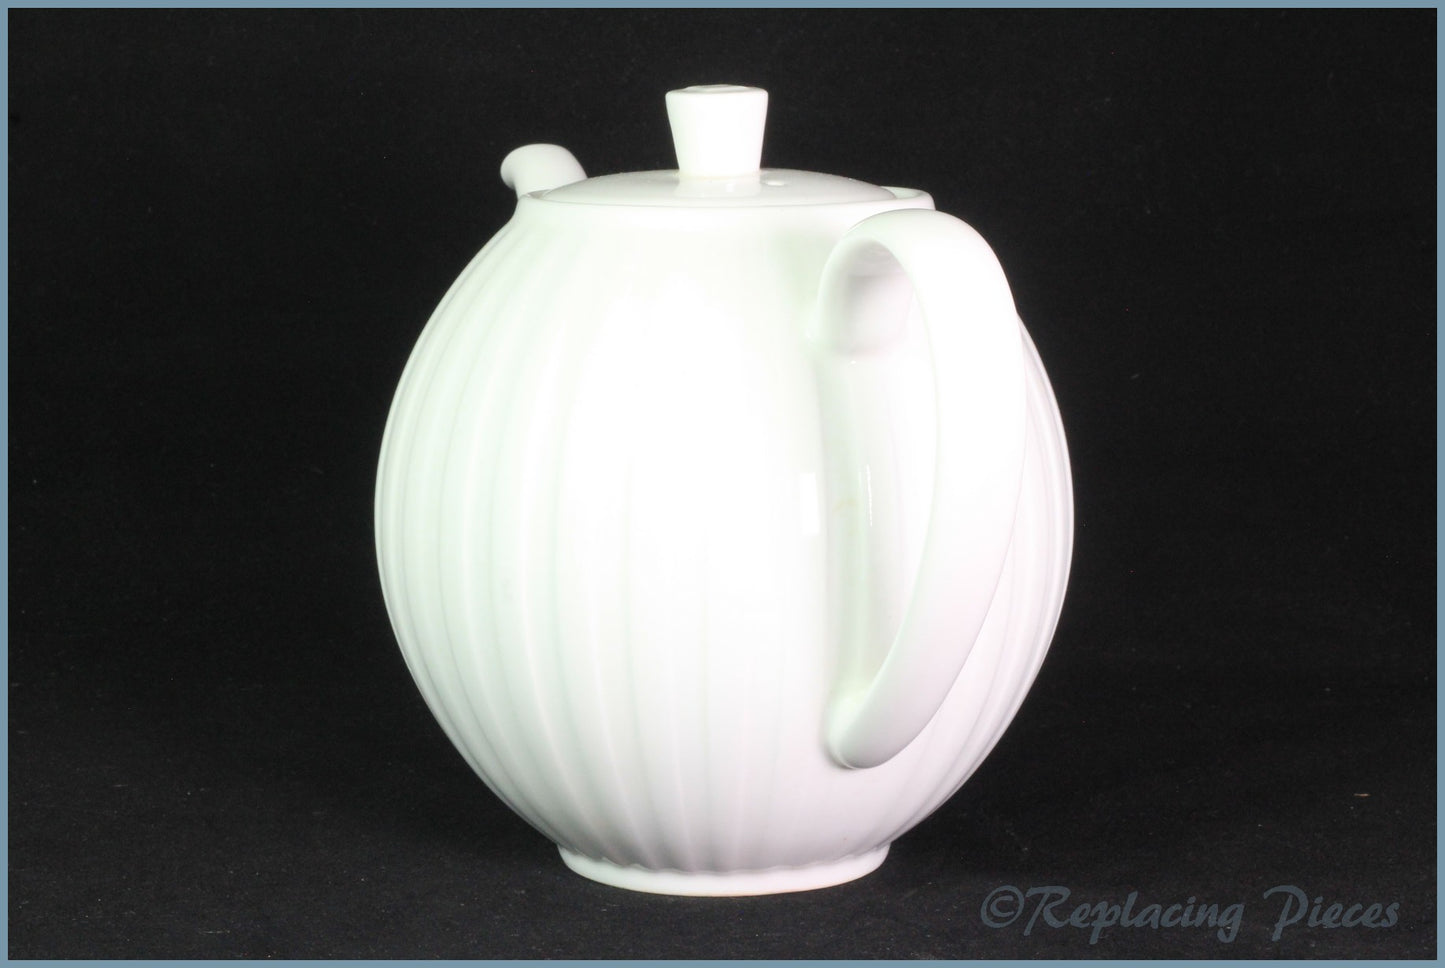 Wedgwood - Night & Day - 2 Pint Teapot (White-Ribbed)